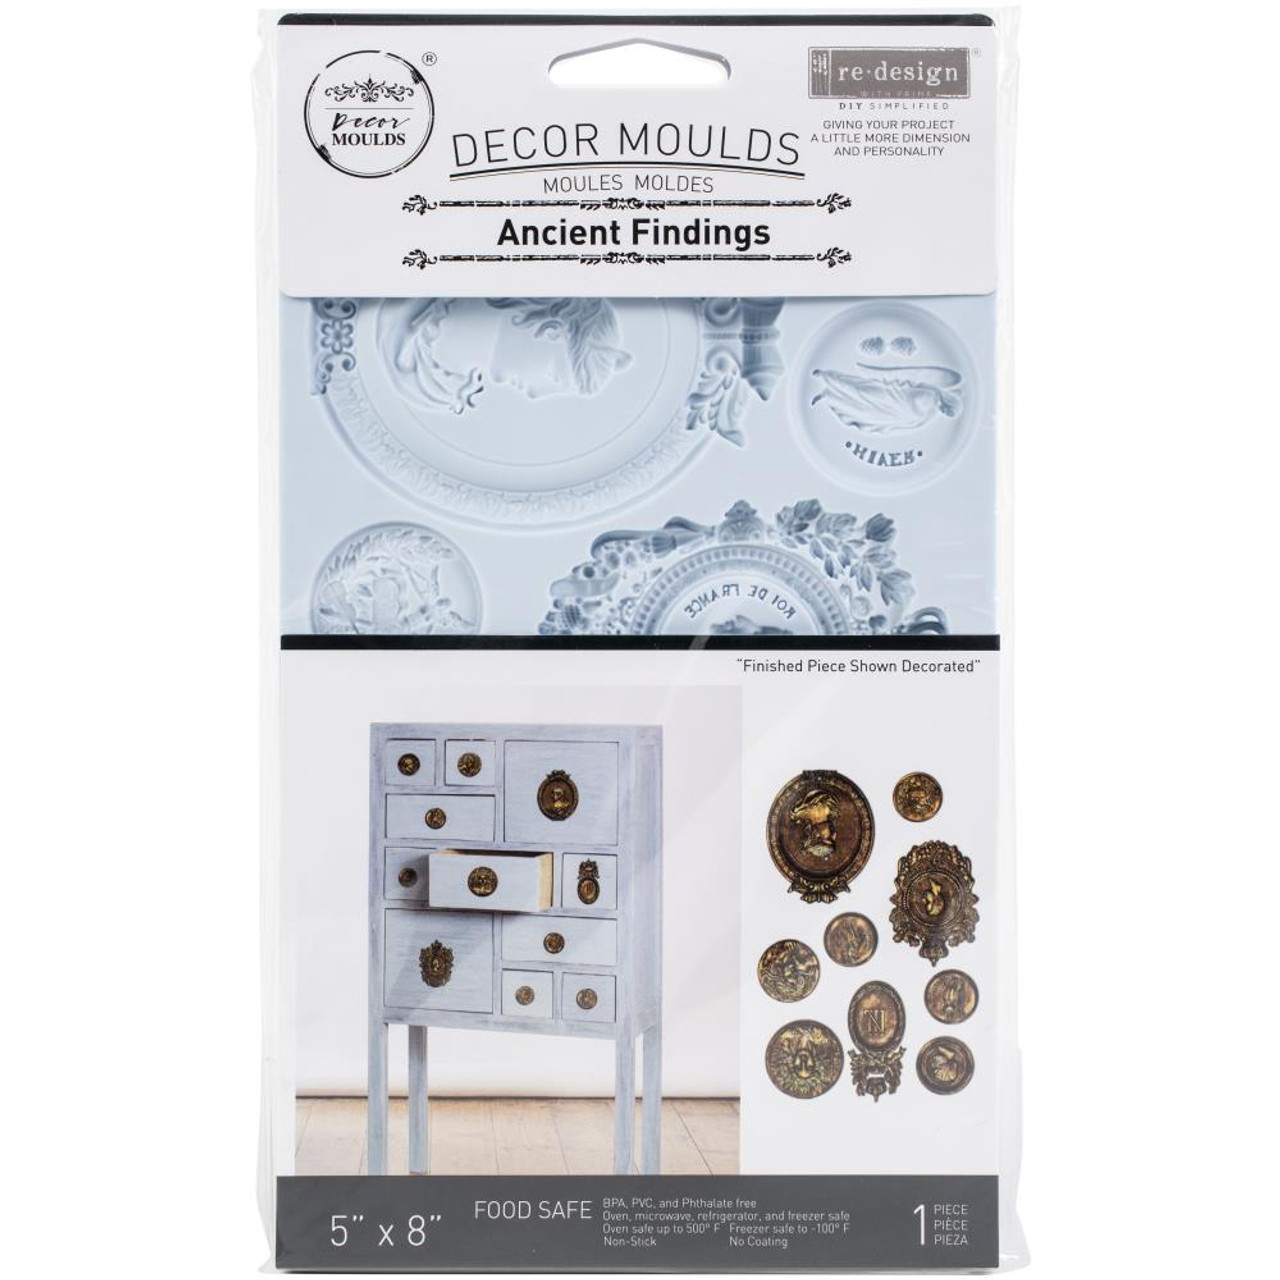 Prima Marketing Re-Design Decor Moulds (Molds) - Ancient Findings (647513)